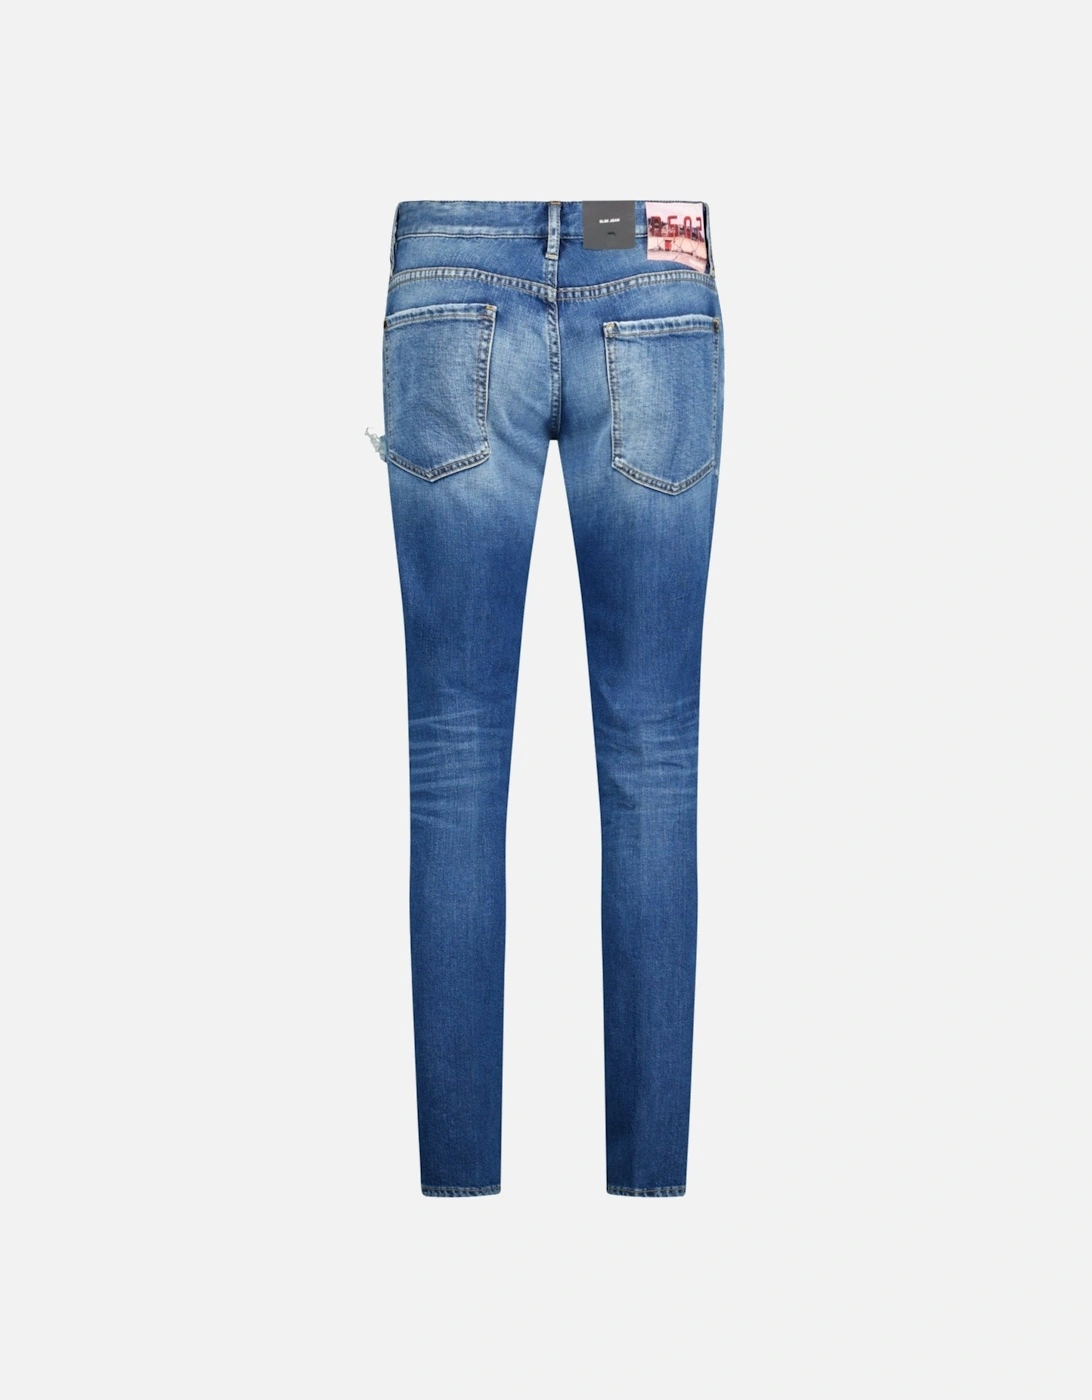 'Slim Jean' DSQ2 Patch Jeans Blue